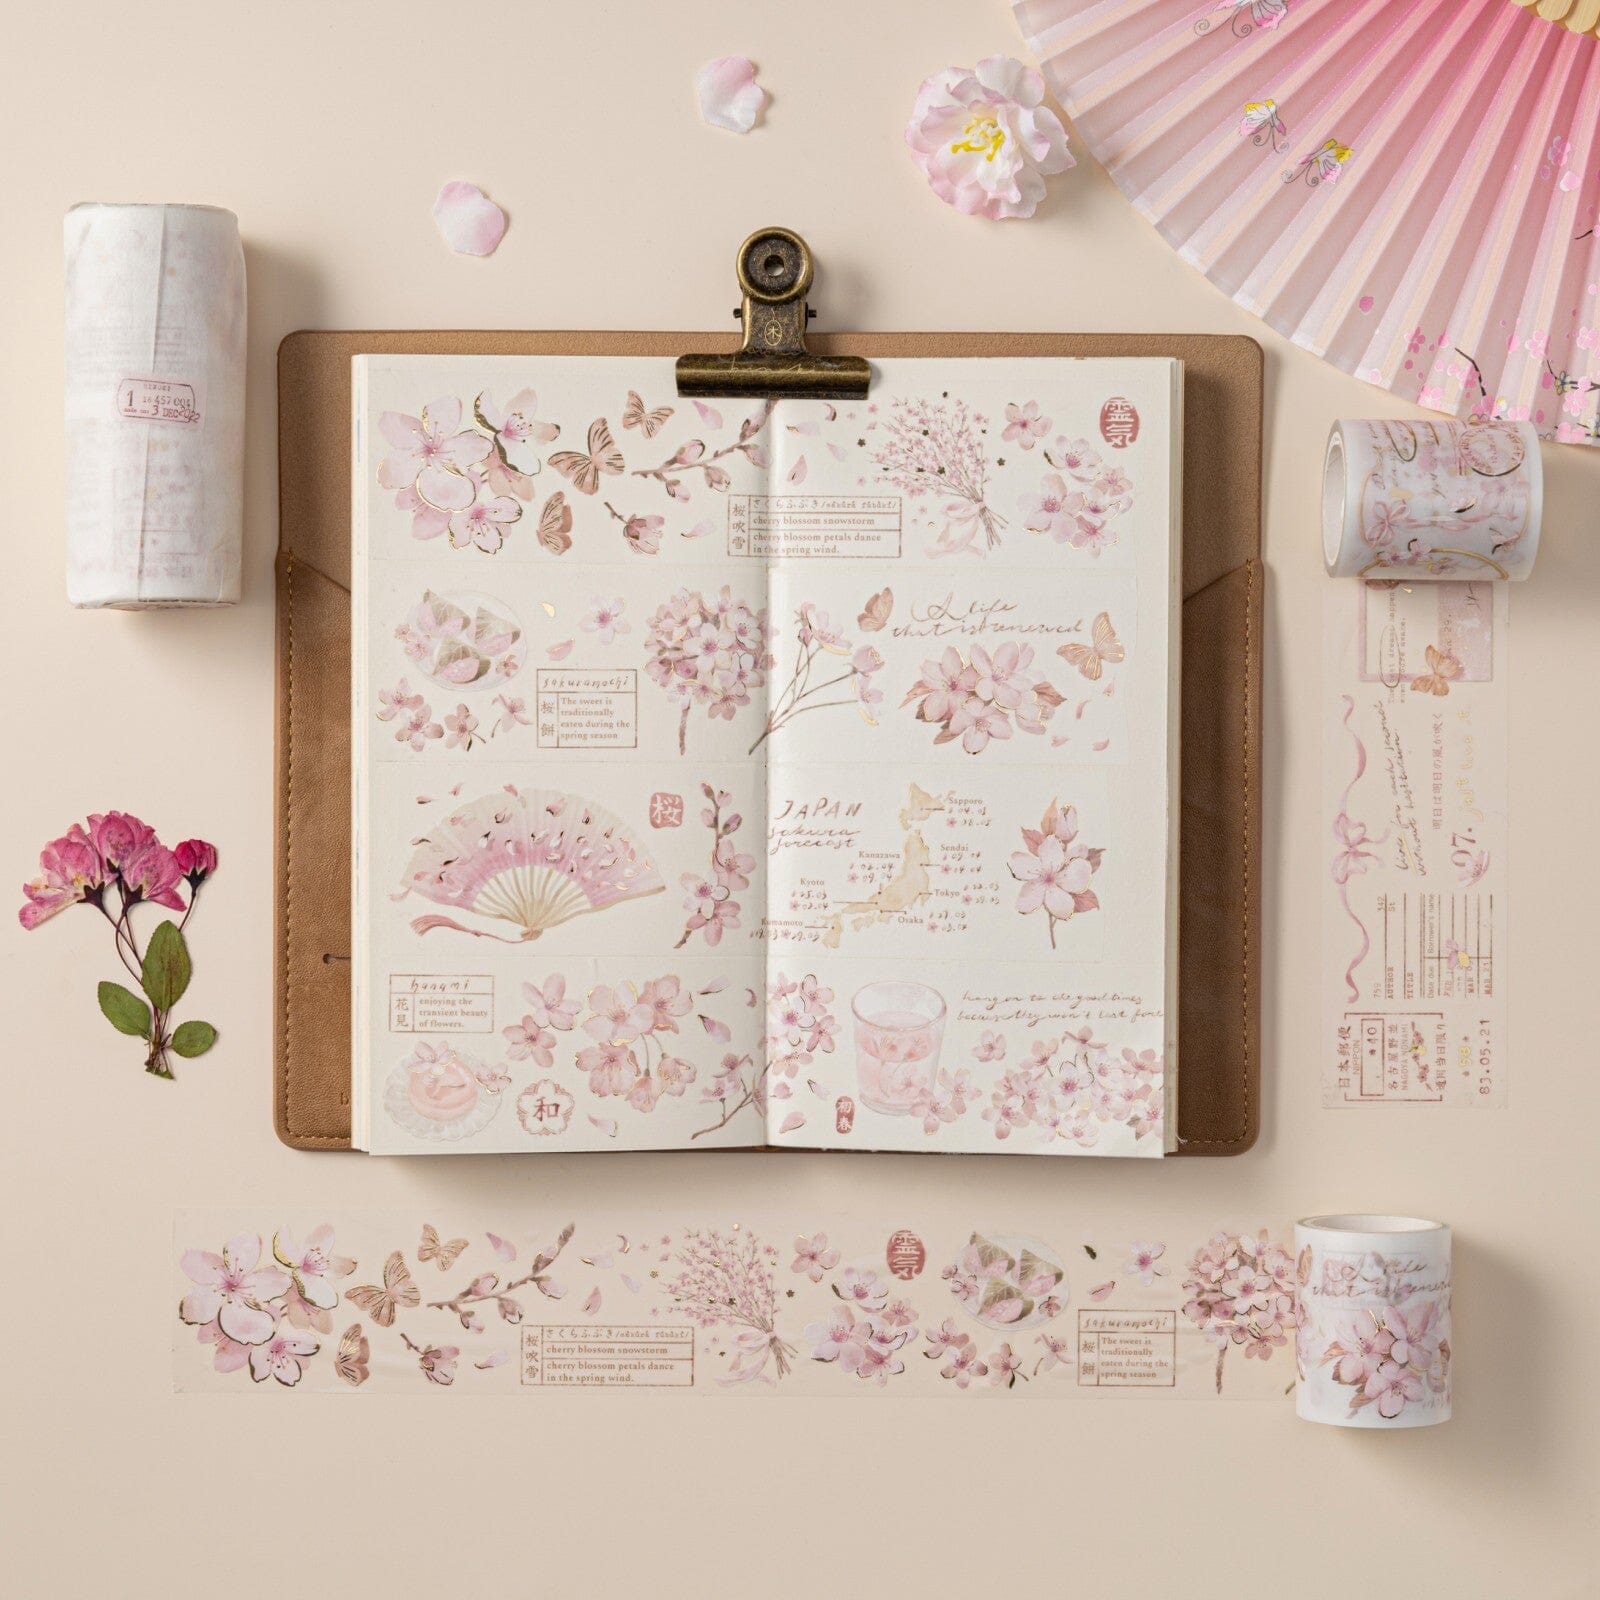 Hinoki Into the Blossom decorative PET tape set with cherry blossom sakura illustrations